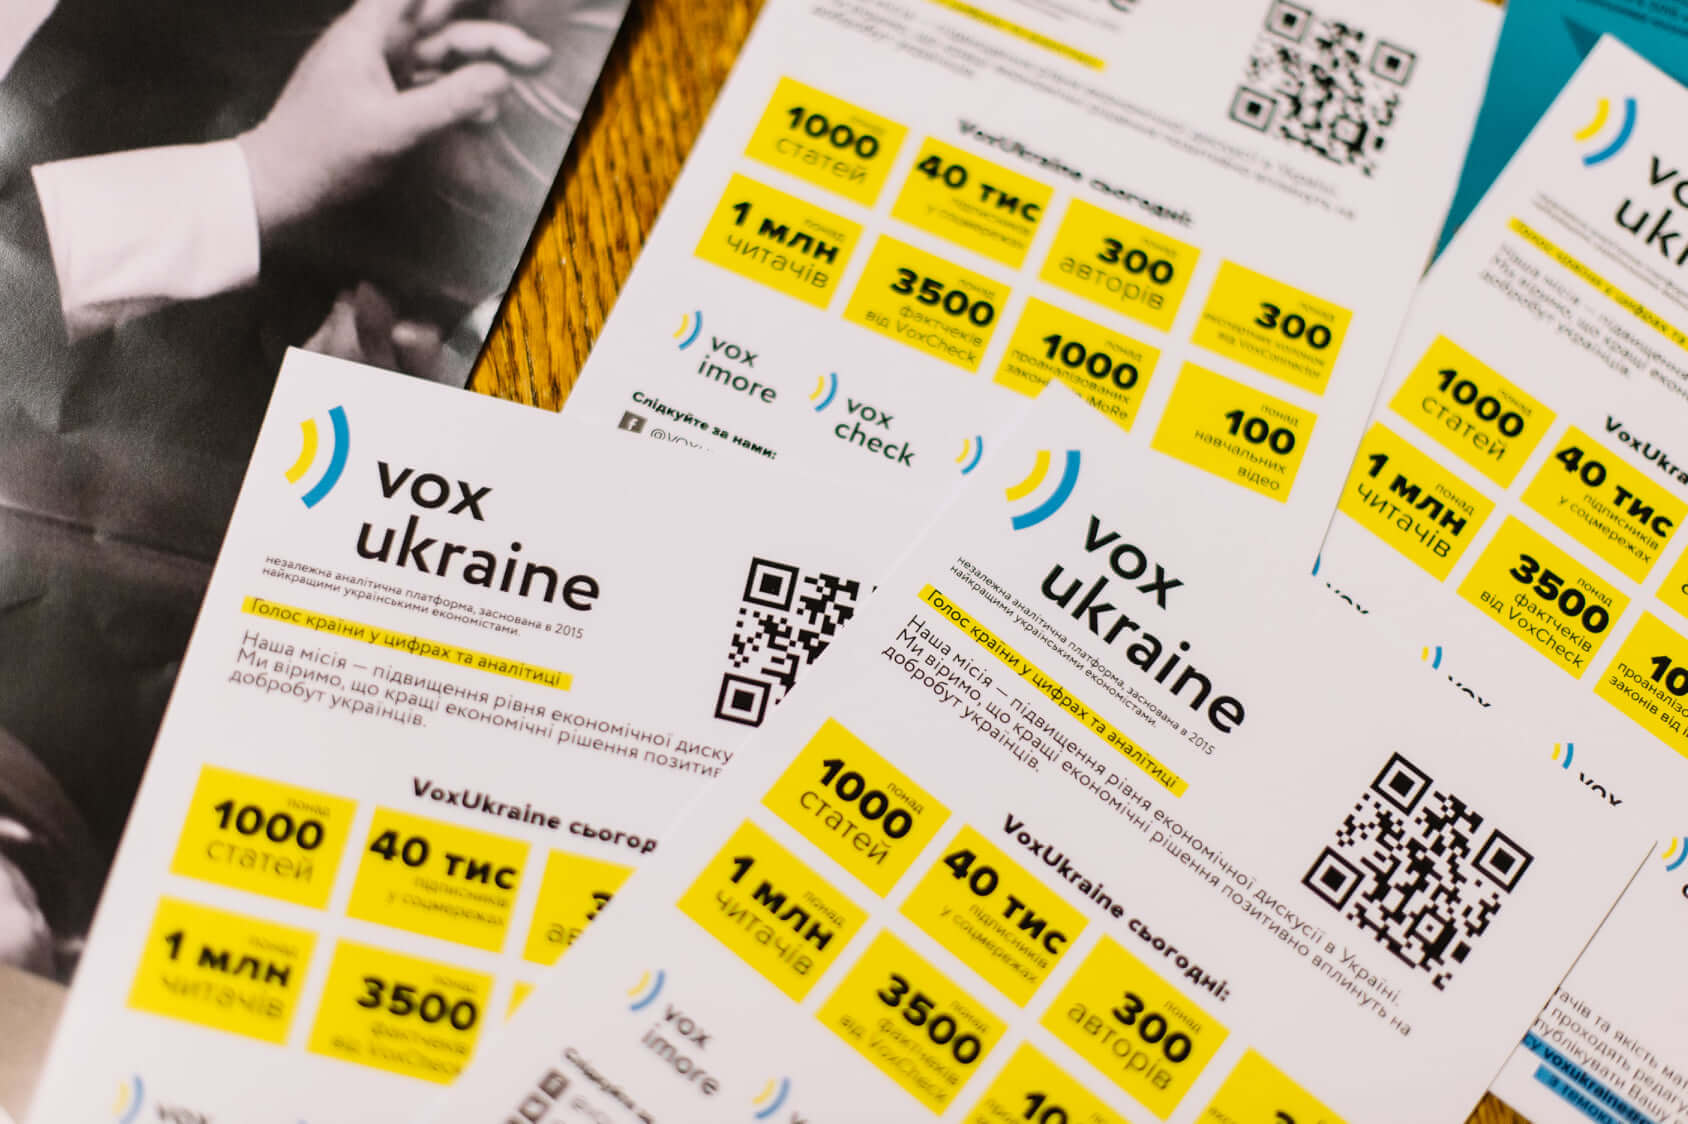 About organizational changes at Vox Ukraine